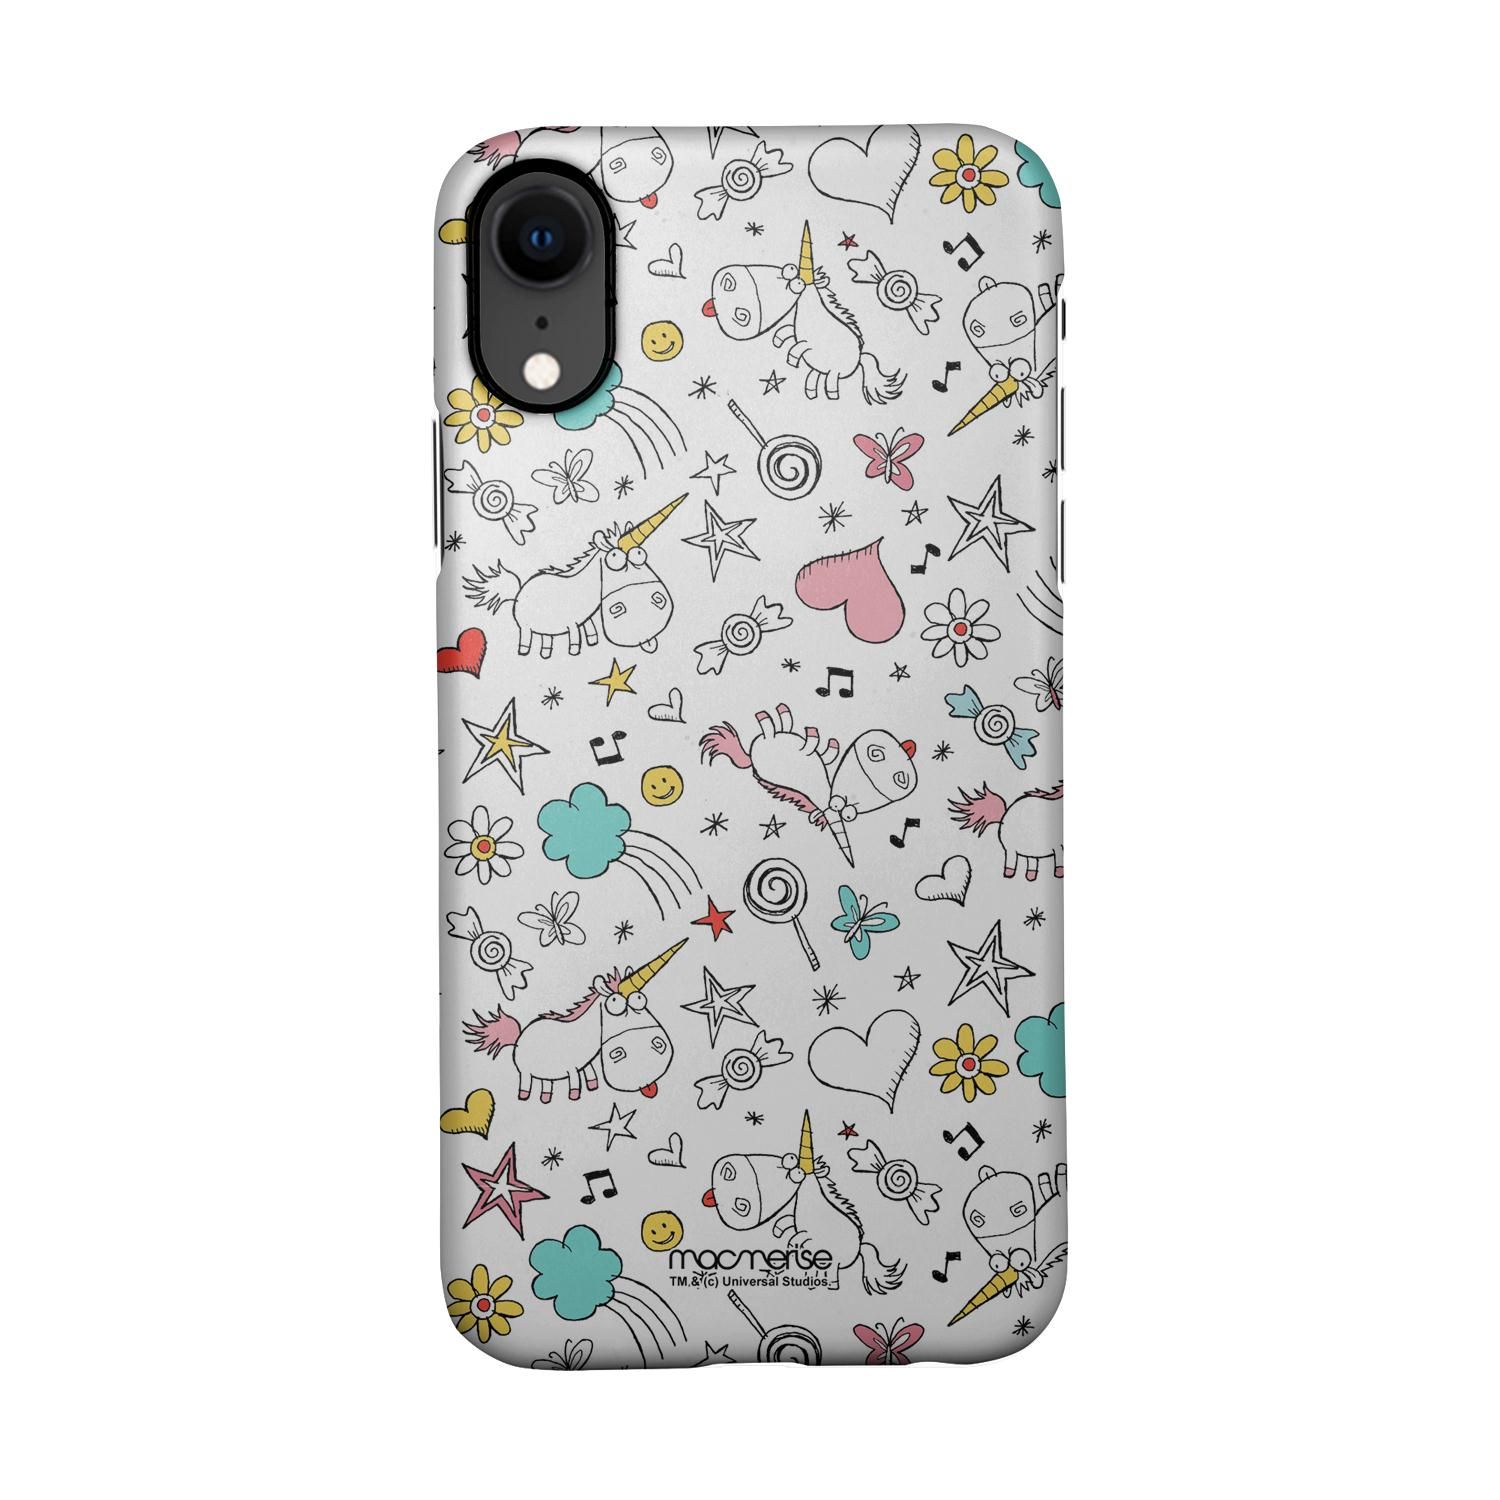 Buy Dreamy Pattern - Sleek Phone Case for iPhone XR Online